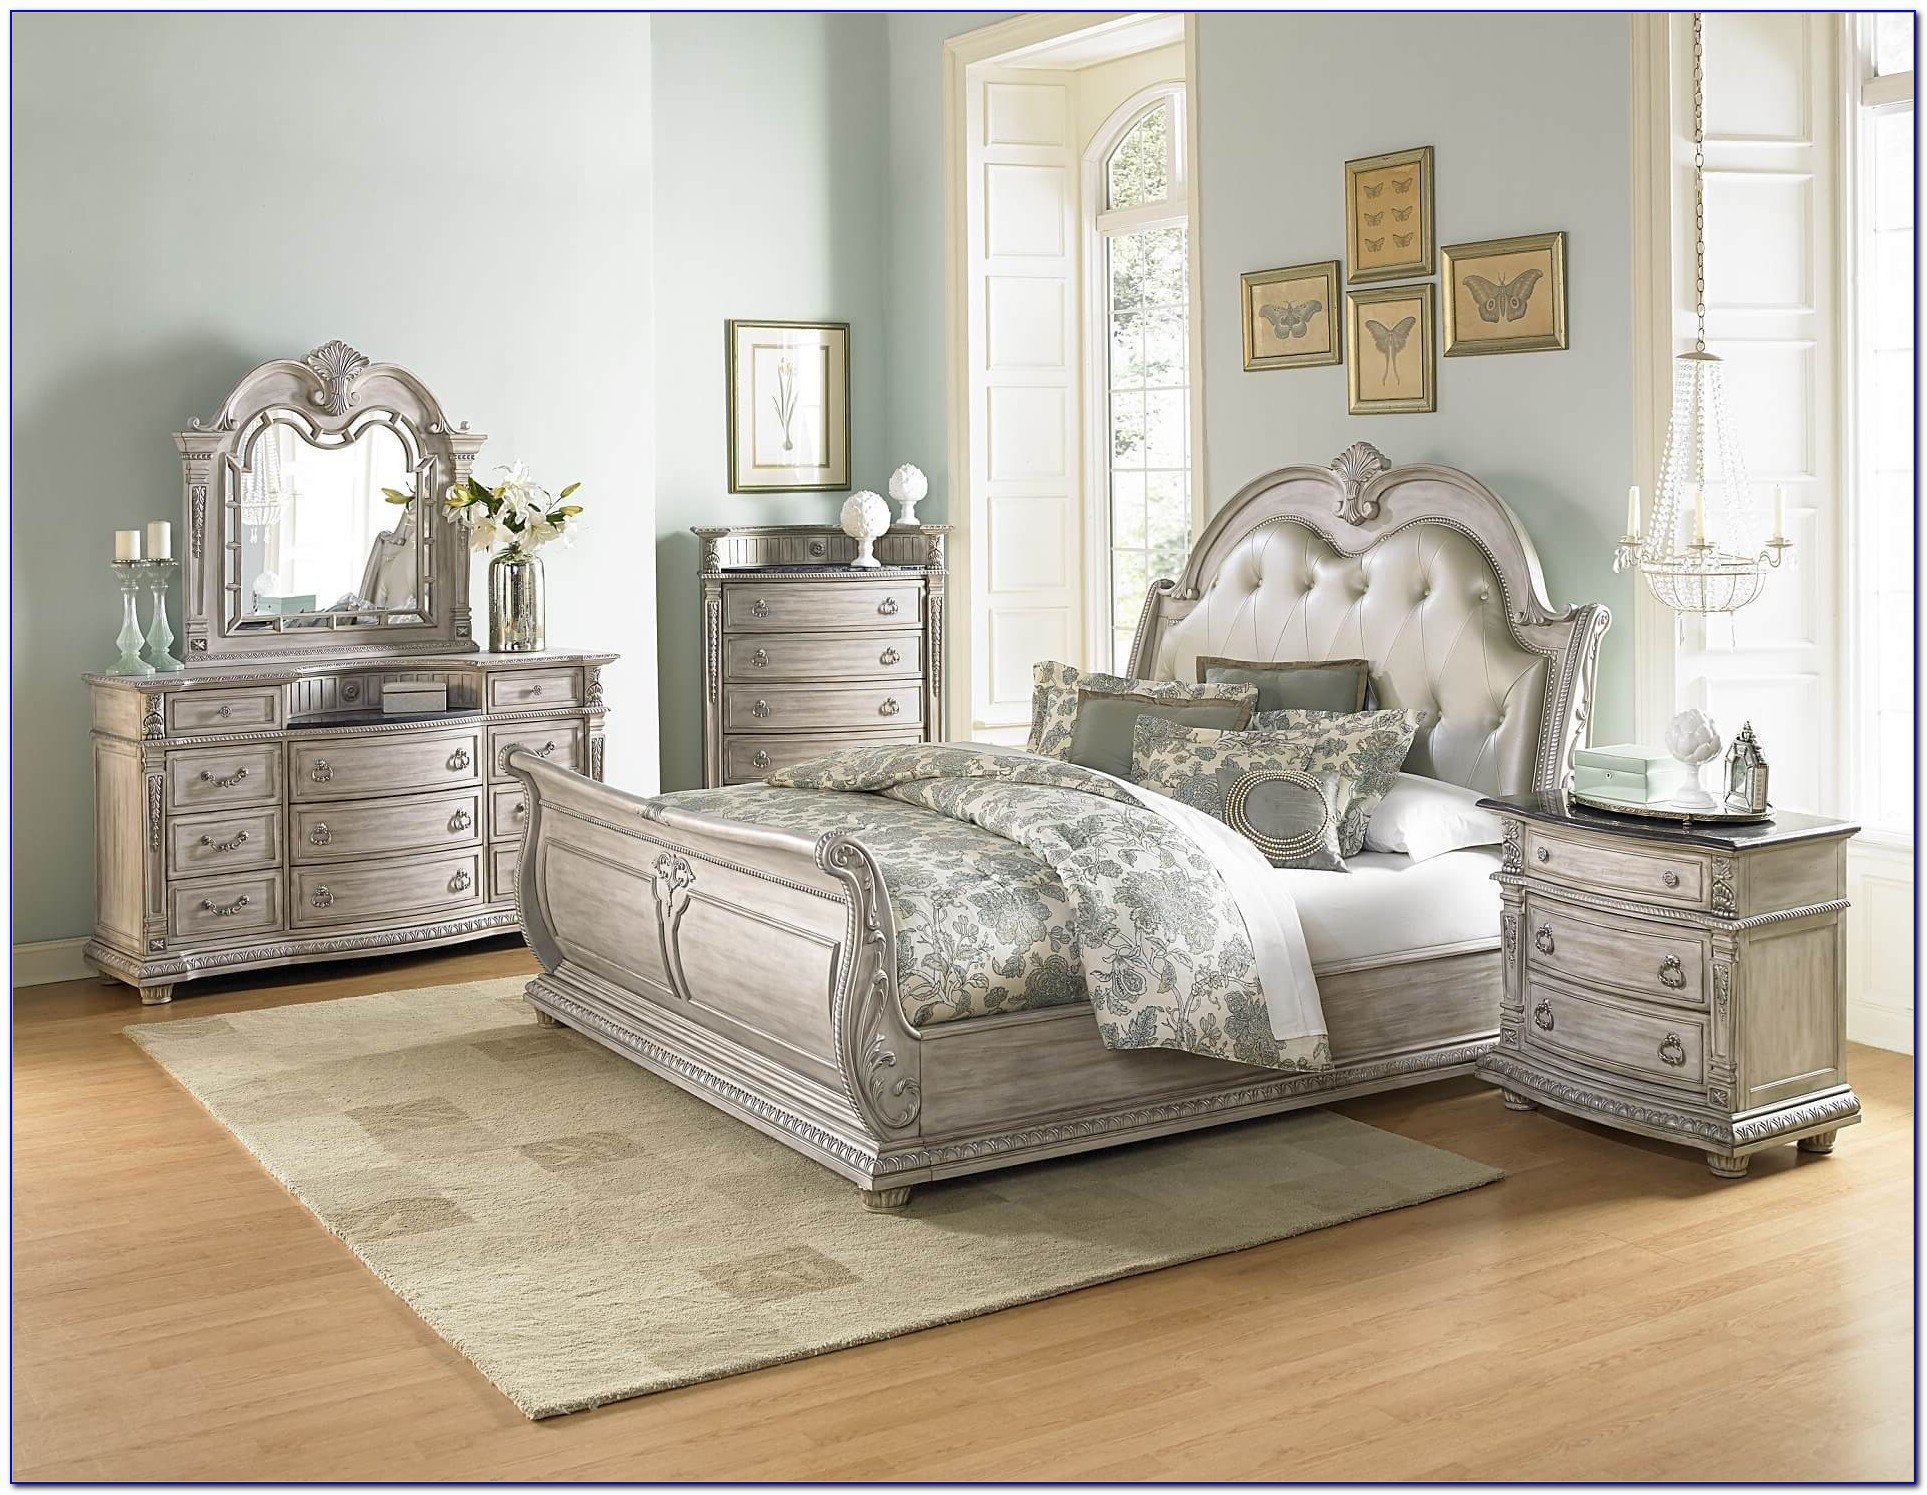 kathy ireland hom bedroome furniture